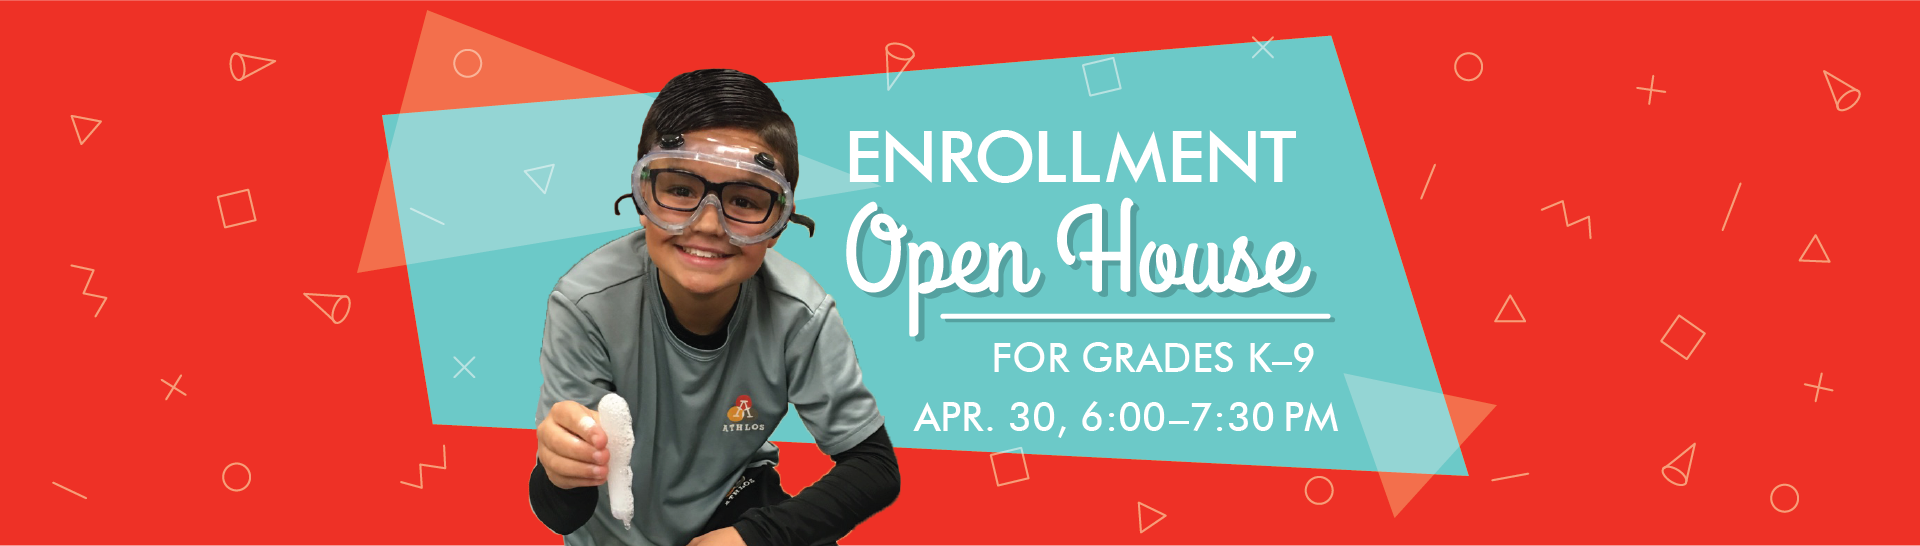 Enrollment Open House for Grades K-9 - April 30, 6-7:30 PM